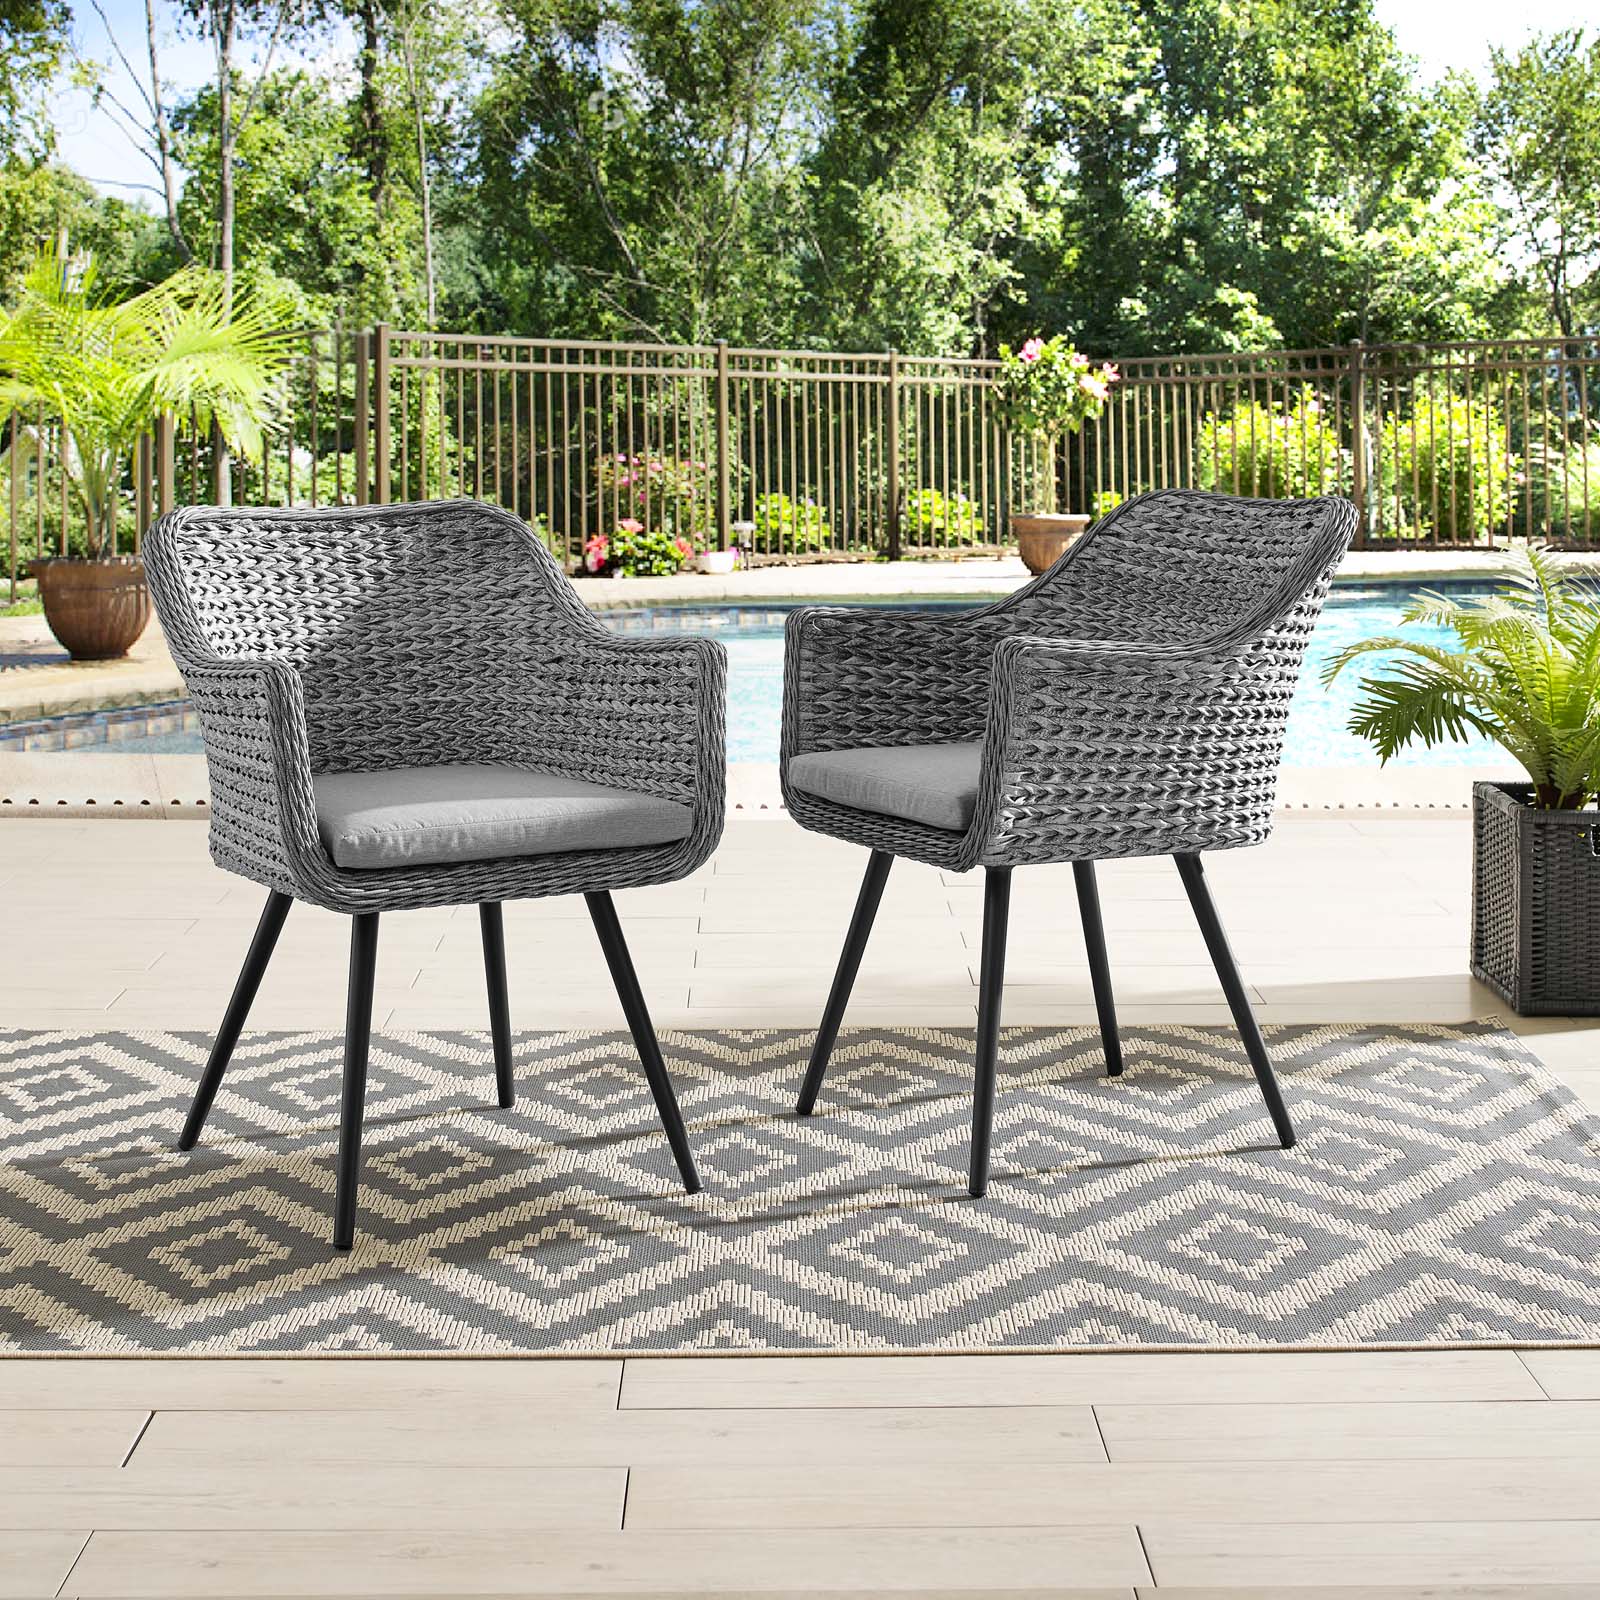 Modern Contemporary Urban Design Outdoor Patio Balcony Garden Furniture Lounge Chair Armchair, Set of Two, Rattan Wicker, Grey Gray - image 2 of 6